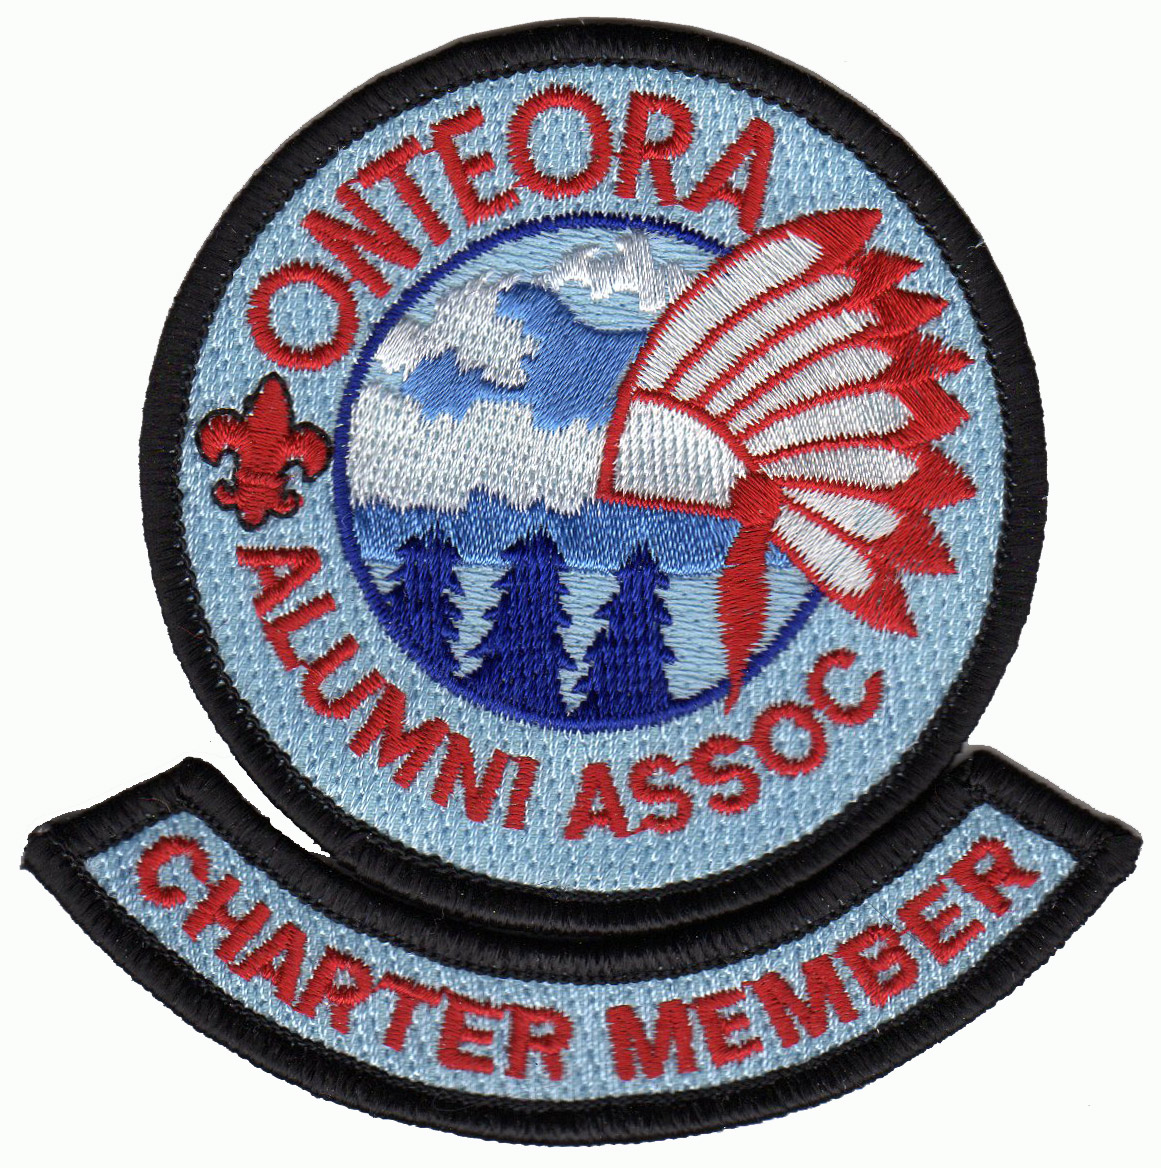 OAA patch - 2002 Charter Member